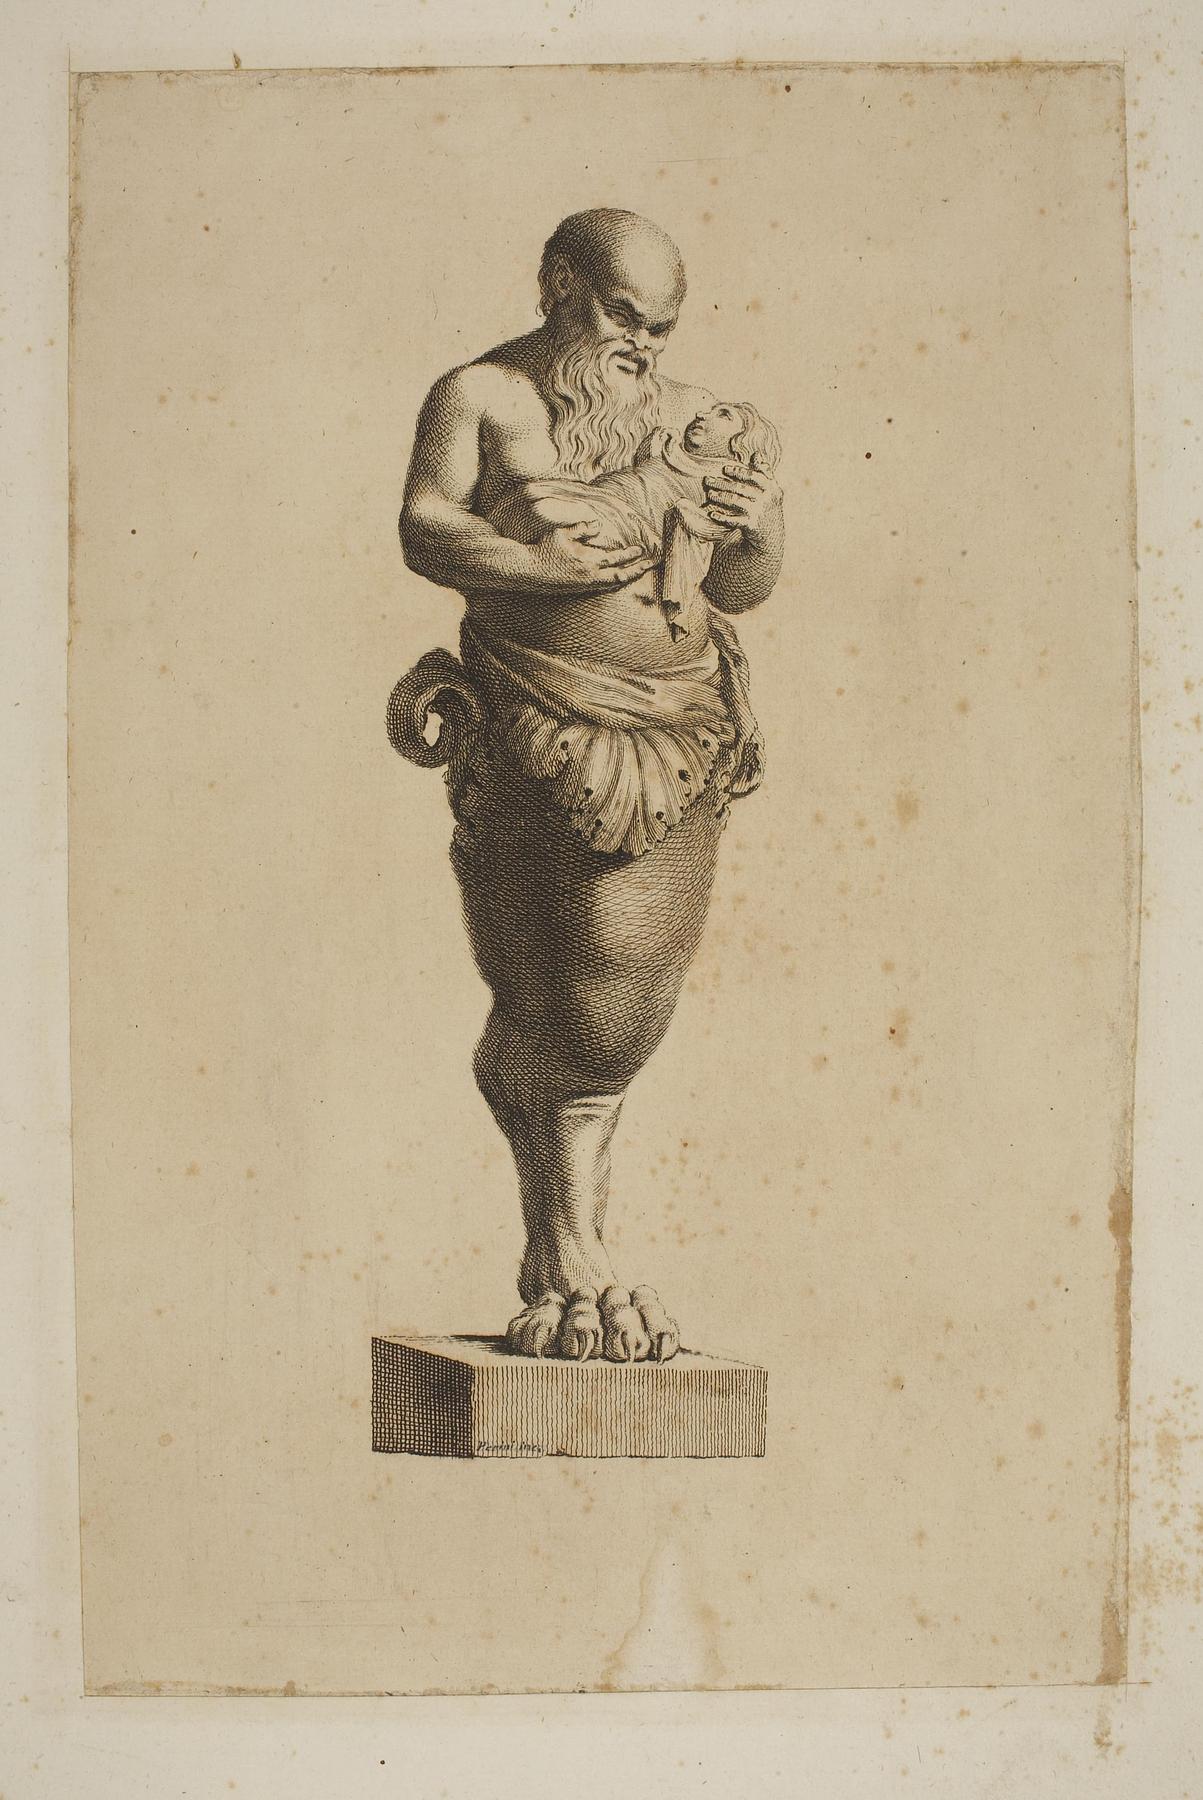 Silenus and the Dionysos-child, E1459